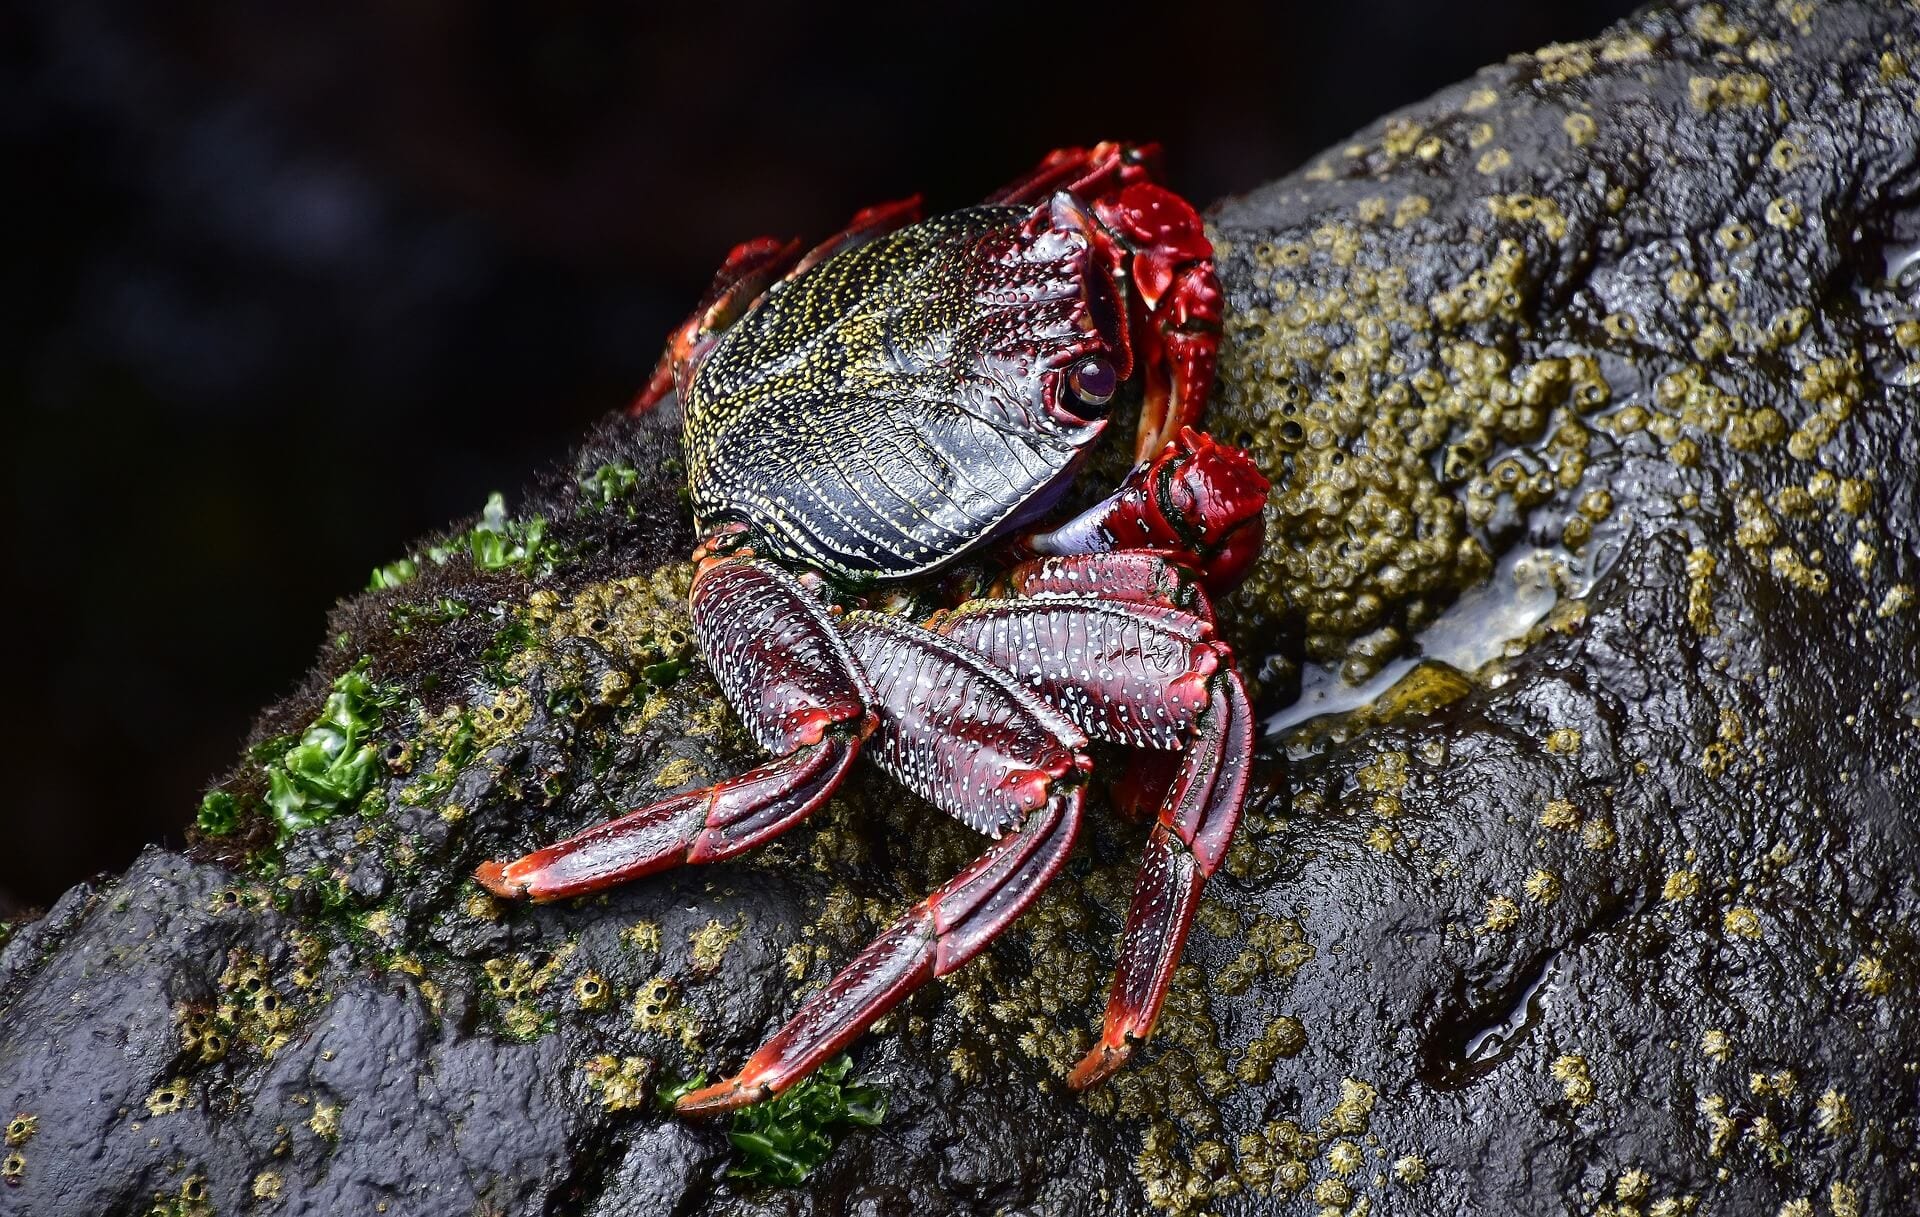 https://pixabay.com/en/sea-crab-rocks-crustacean-3449218/